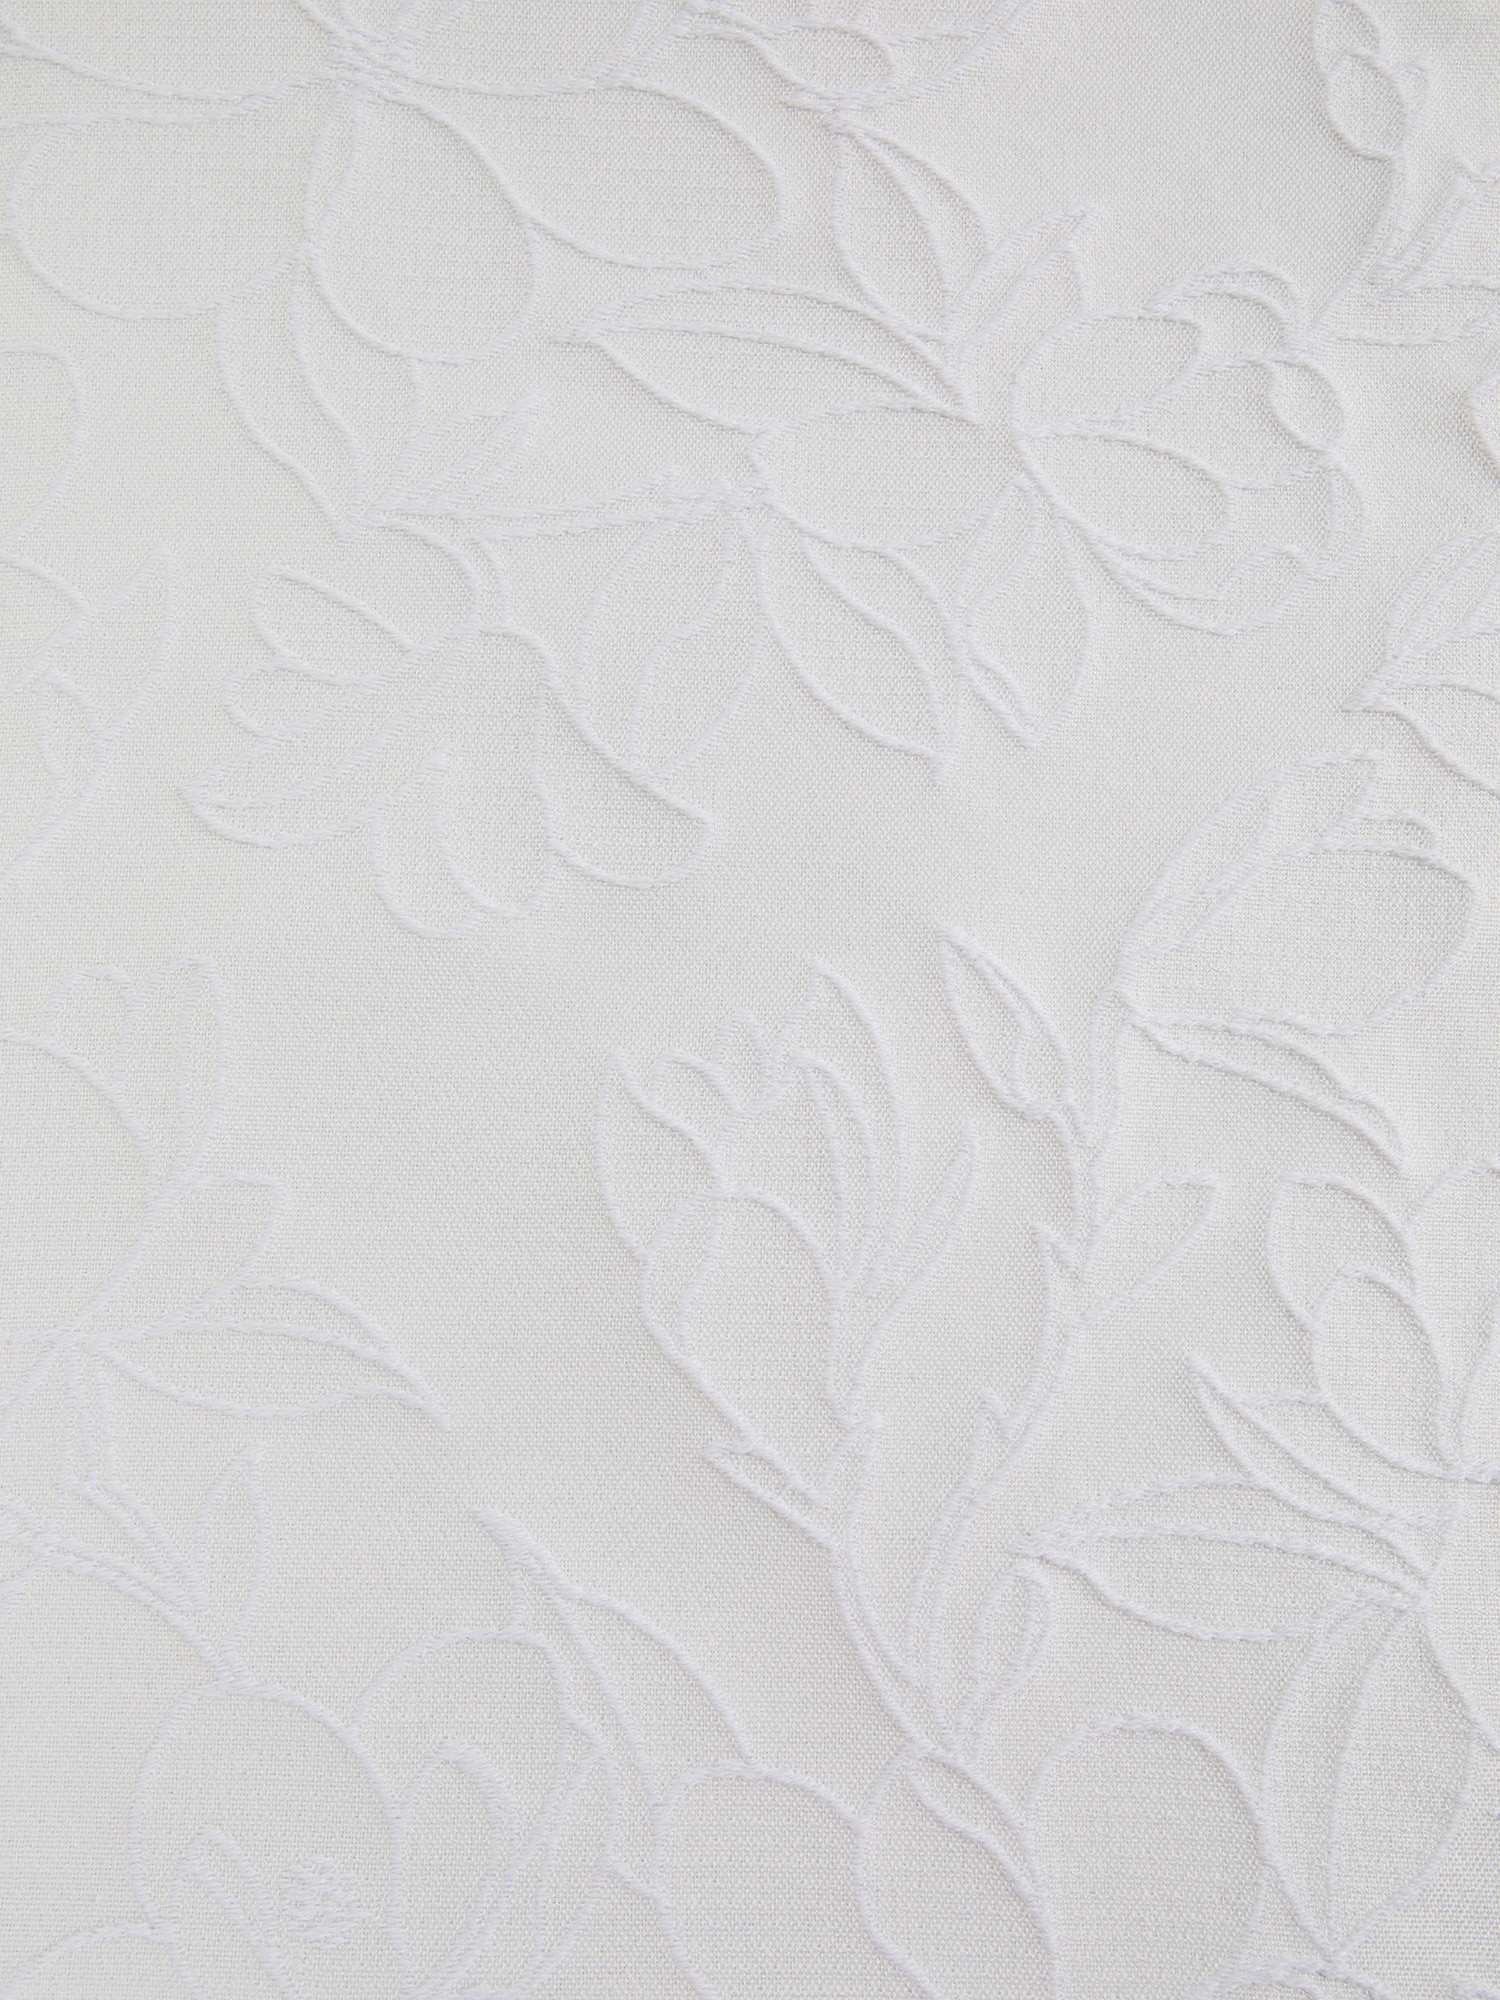 Copriletto cotone tinta unita motivo floreale, Bianco, large image number 1